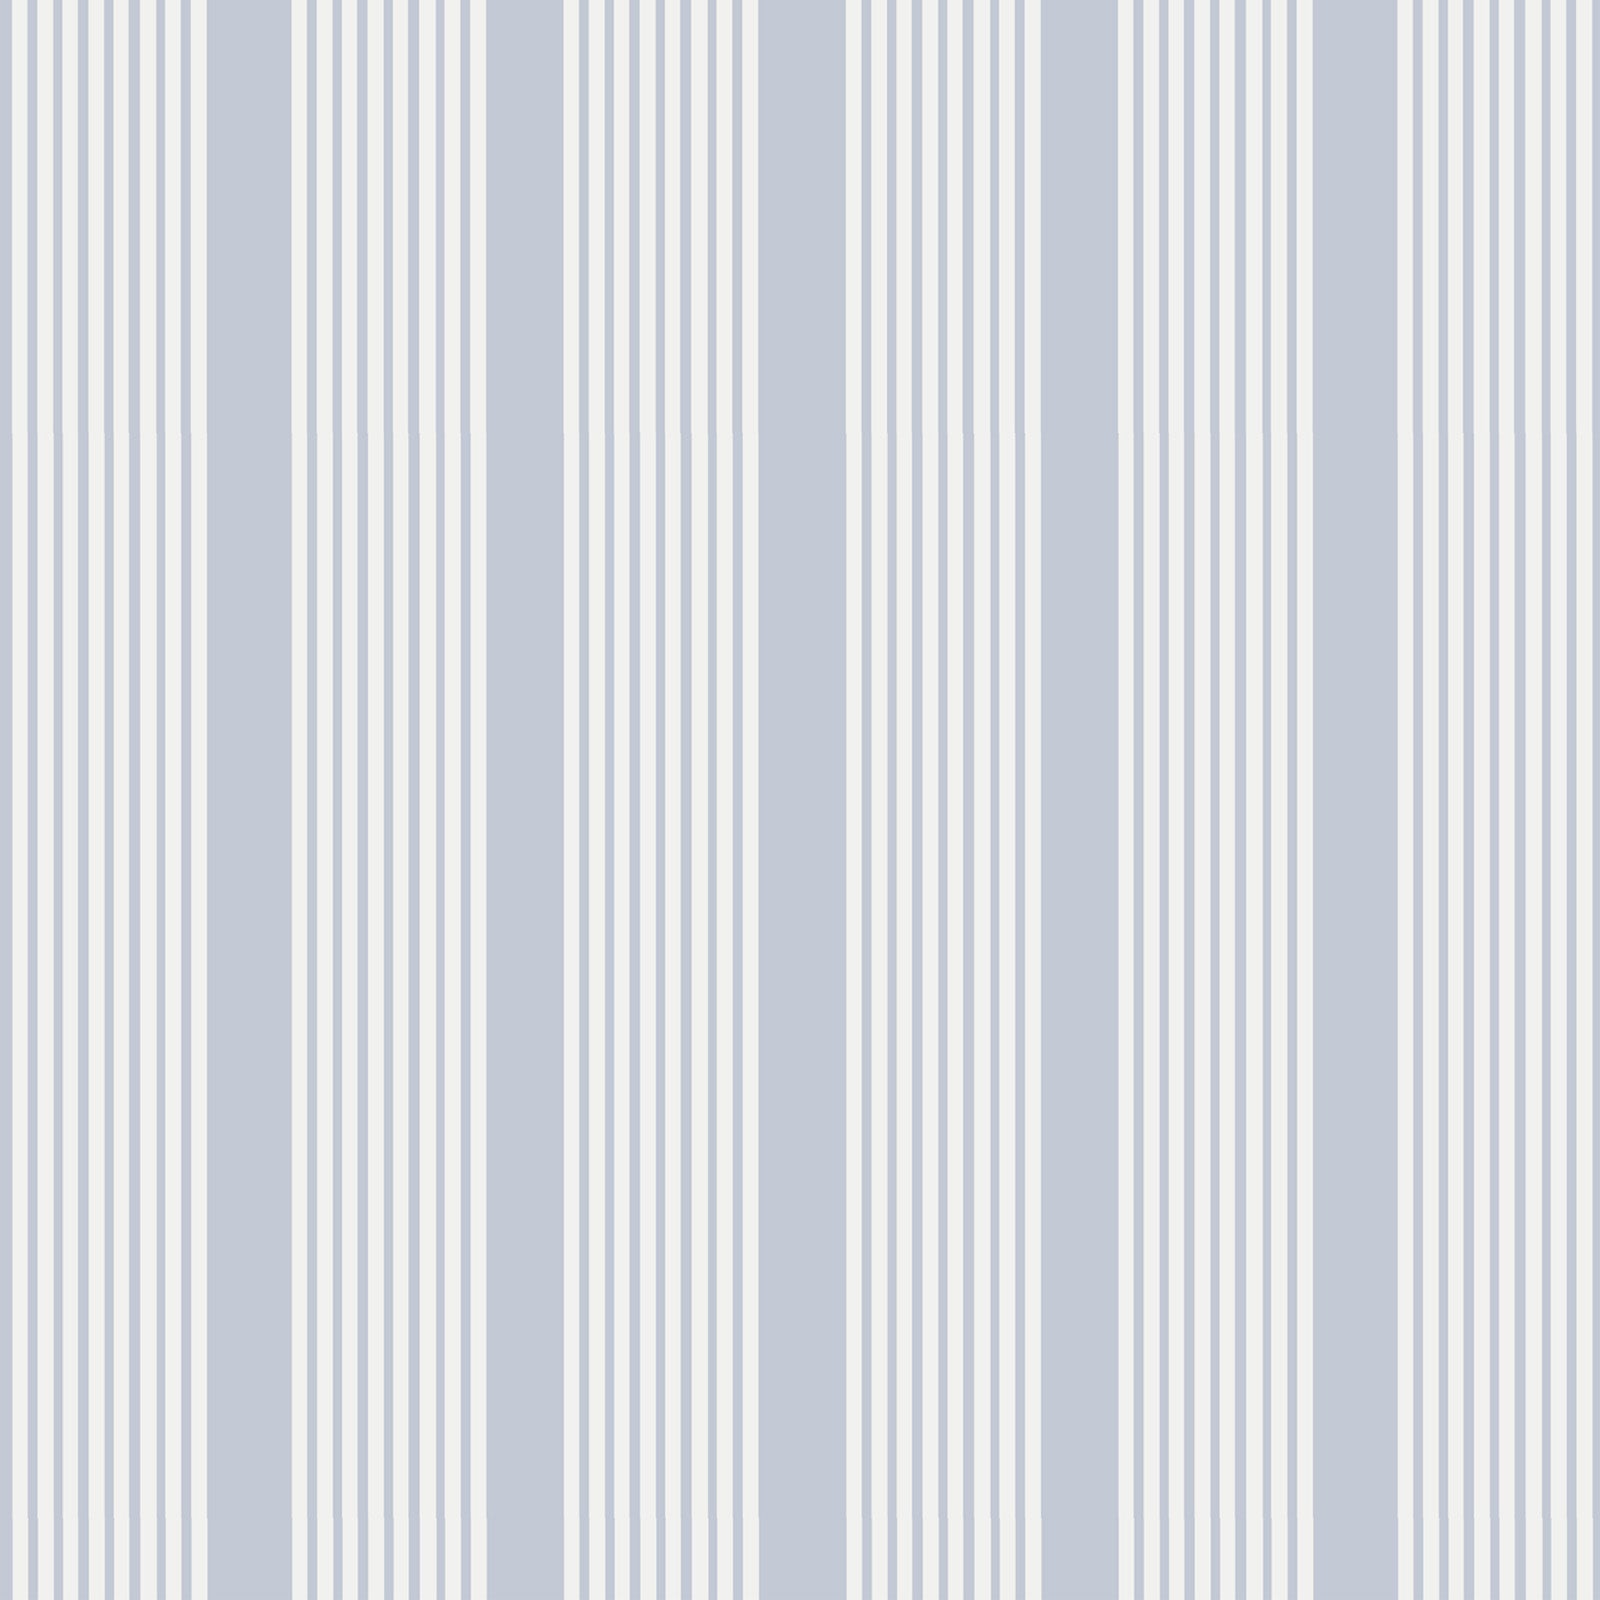 light blue horizontal striped background